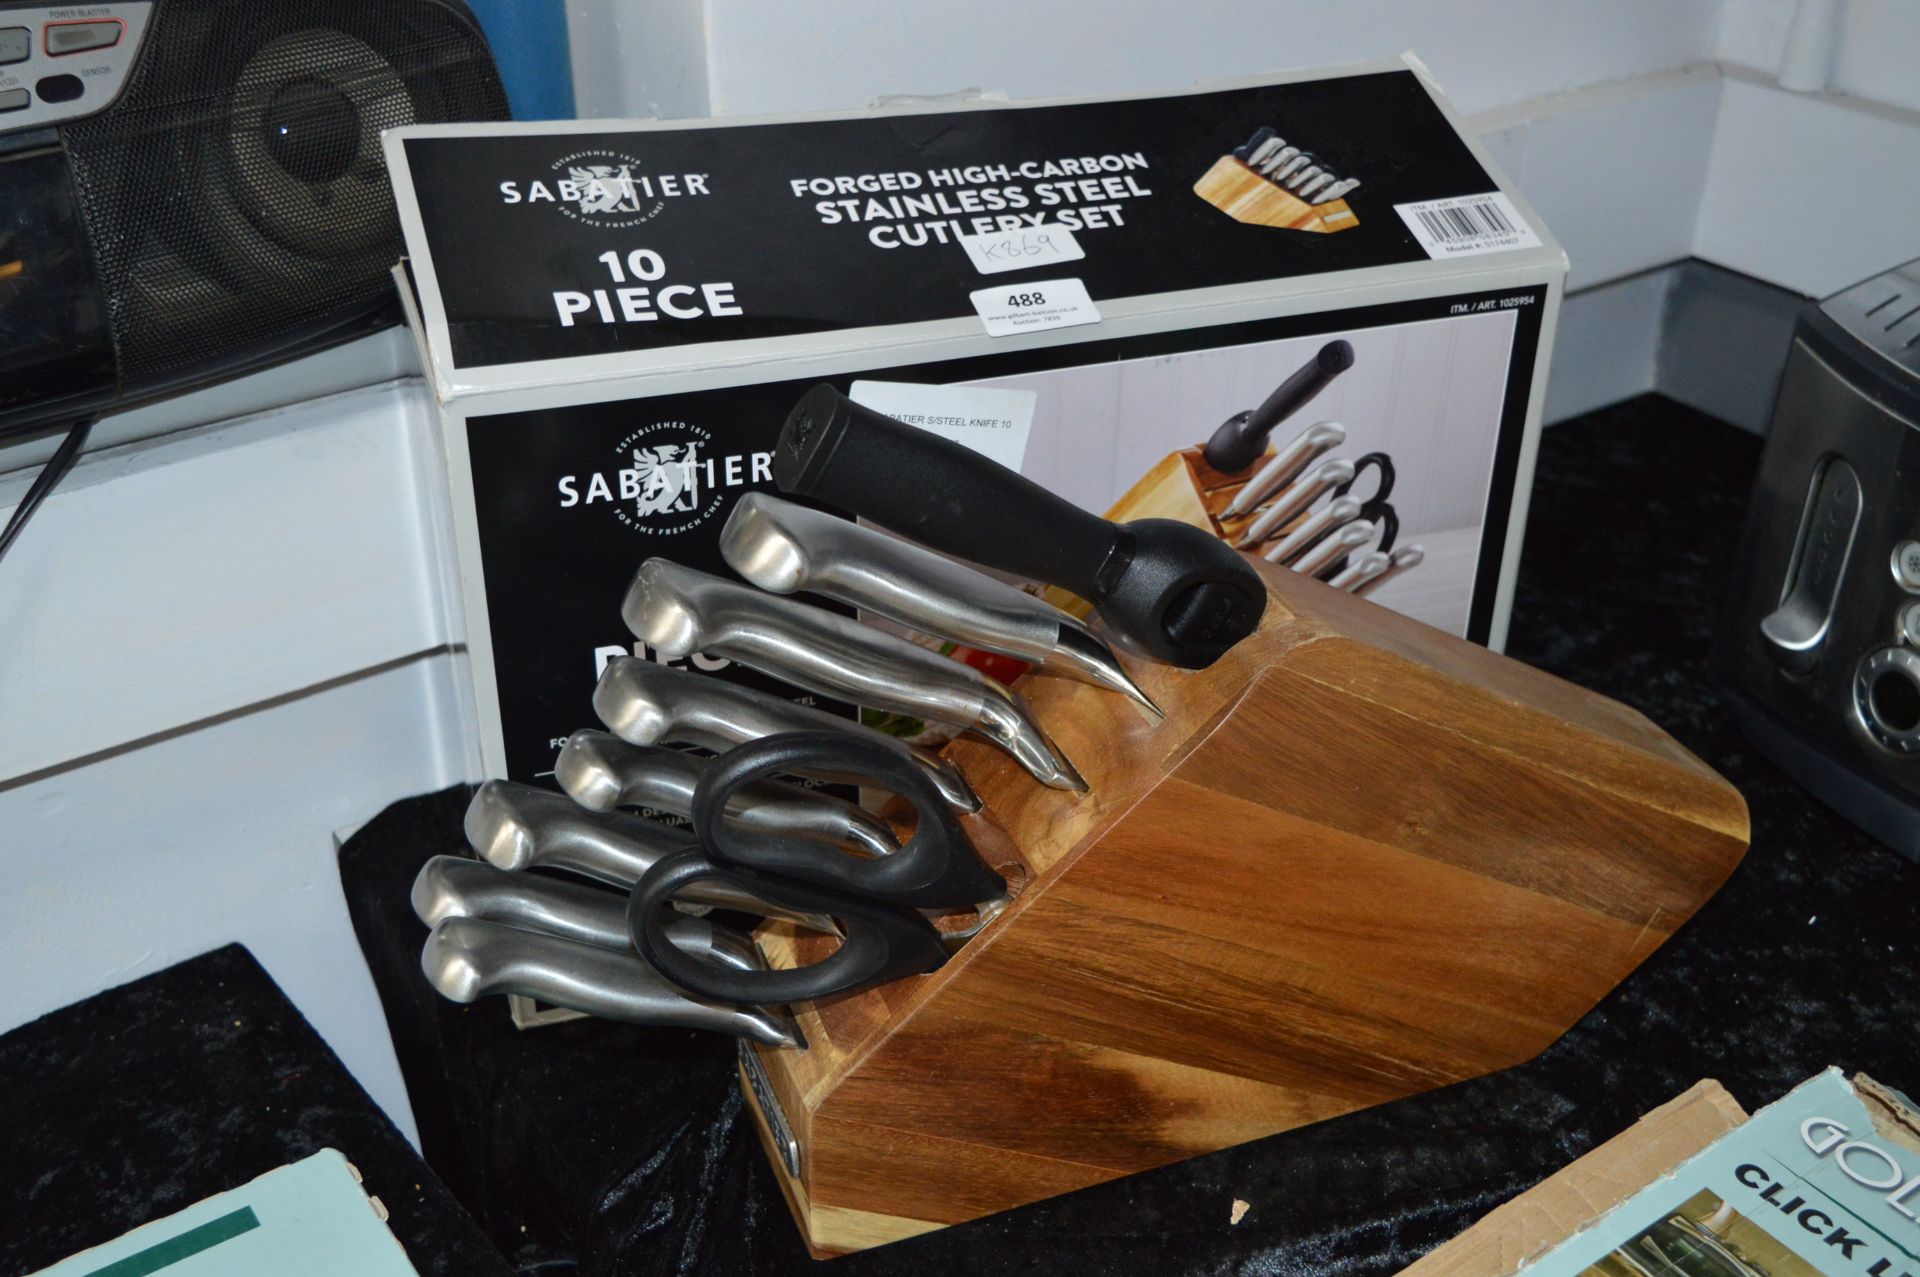 Sabatier 10 Piece Stainless Steel Knife Set